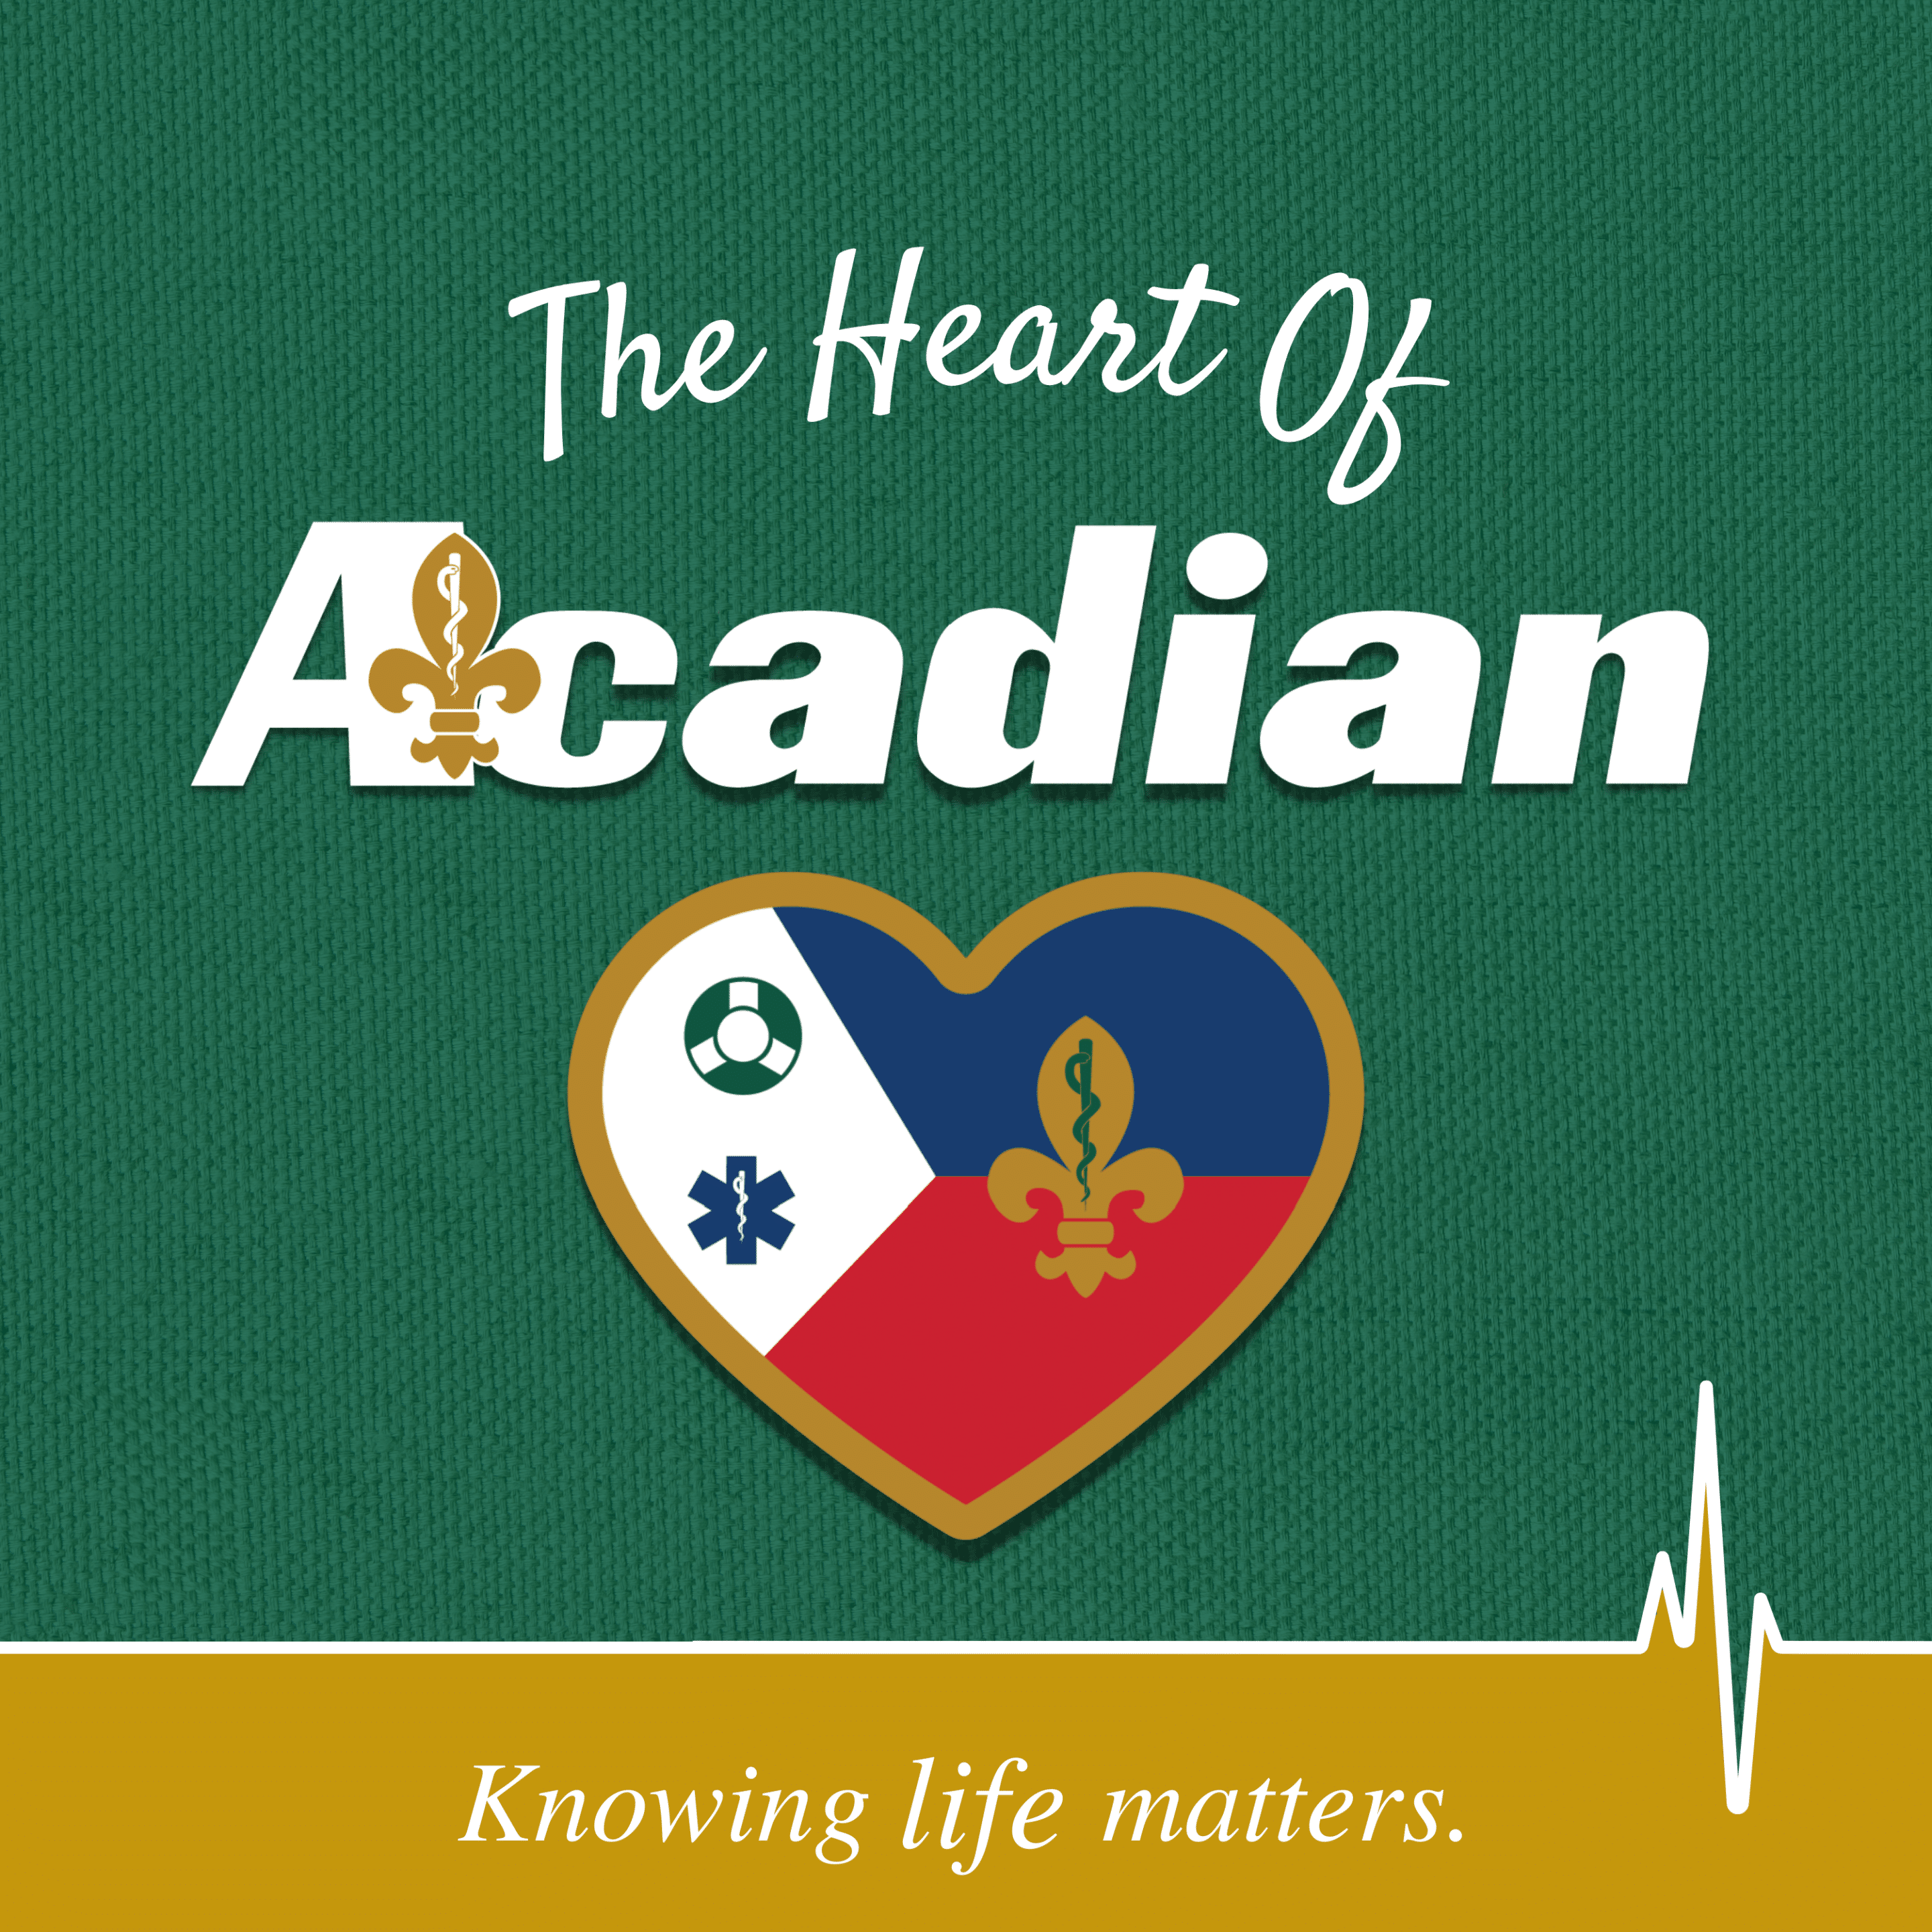 Heart of Acadian